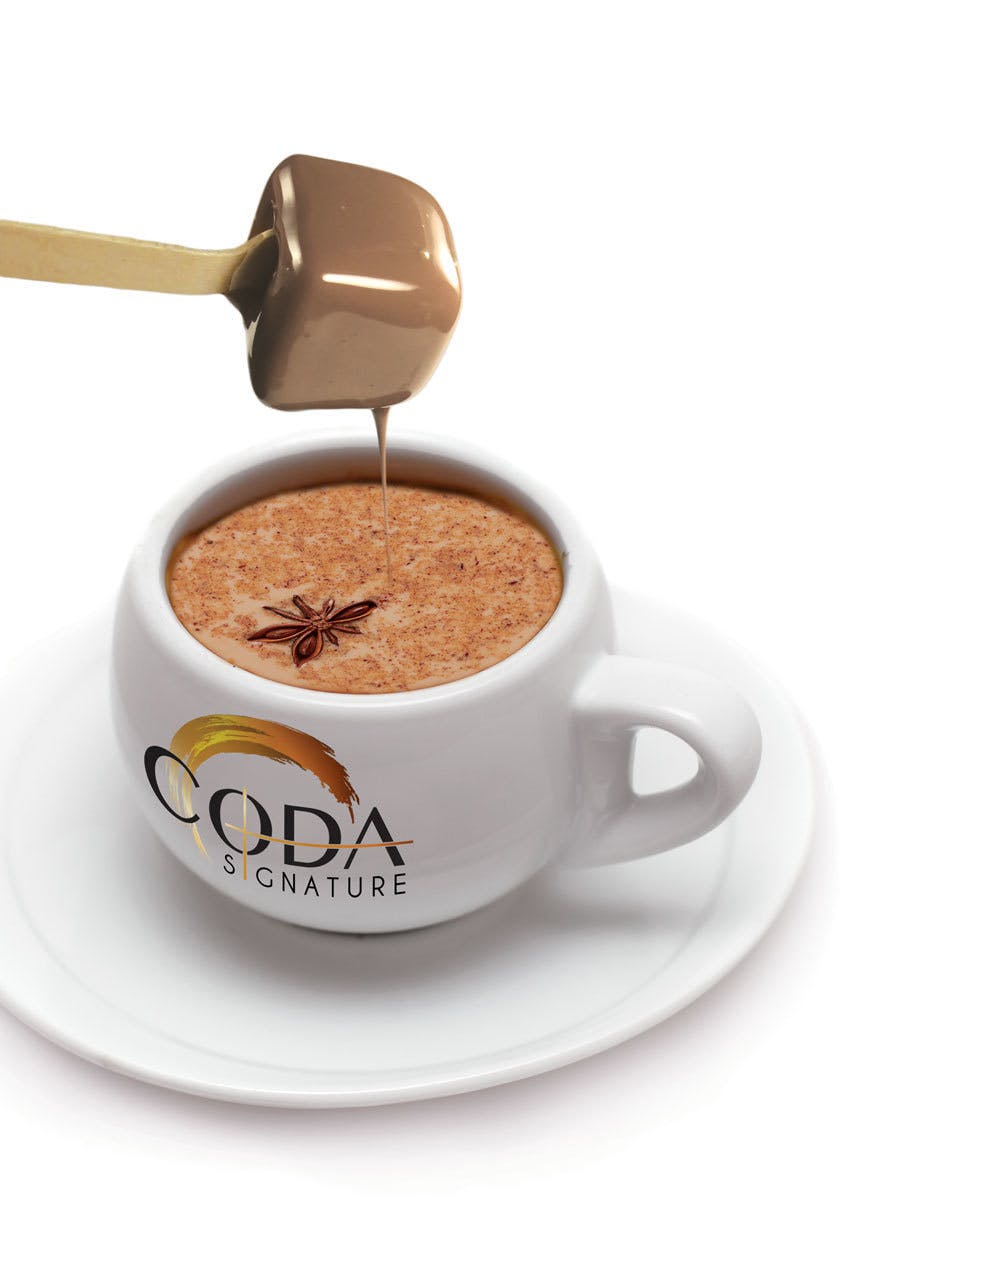 edible-coda-hot-chocolate-on-a-spoon-chai